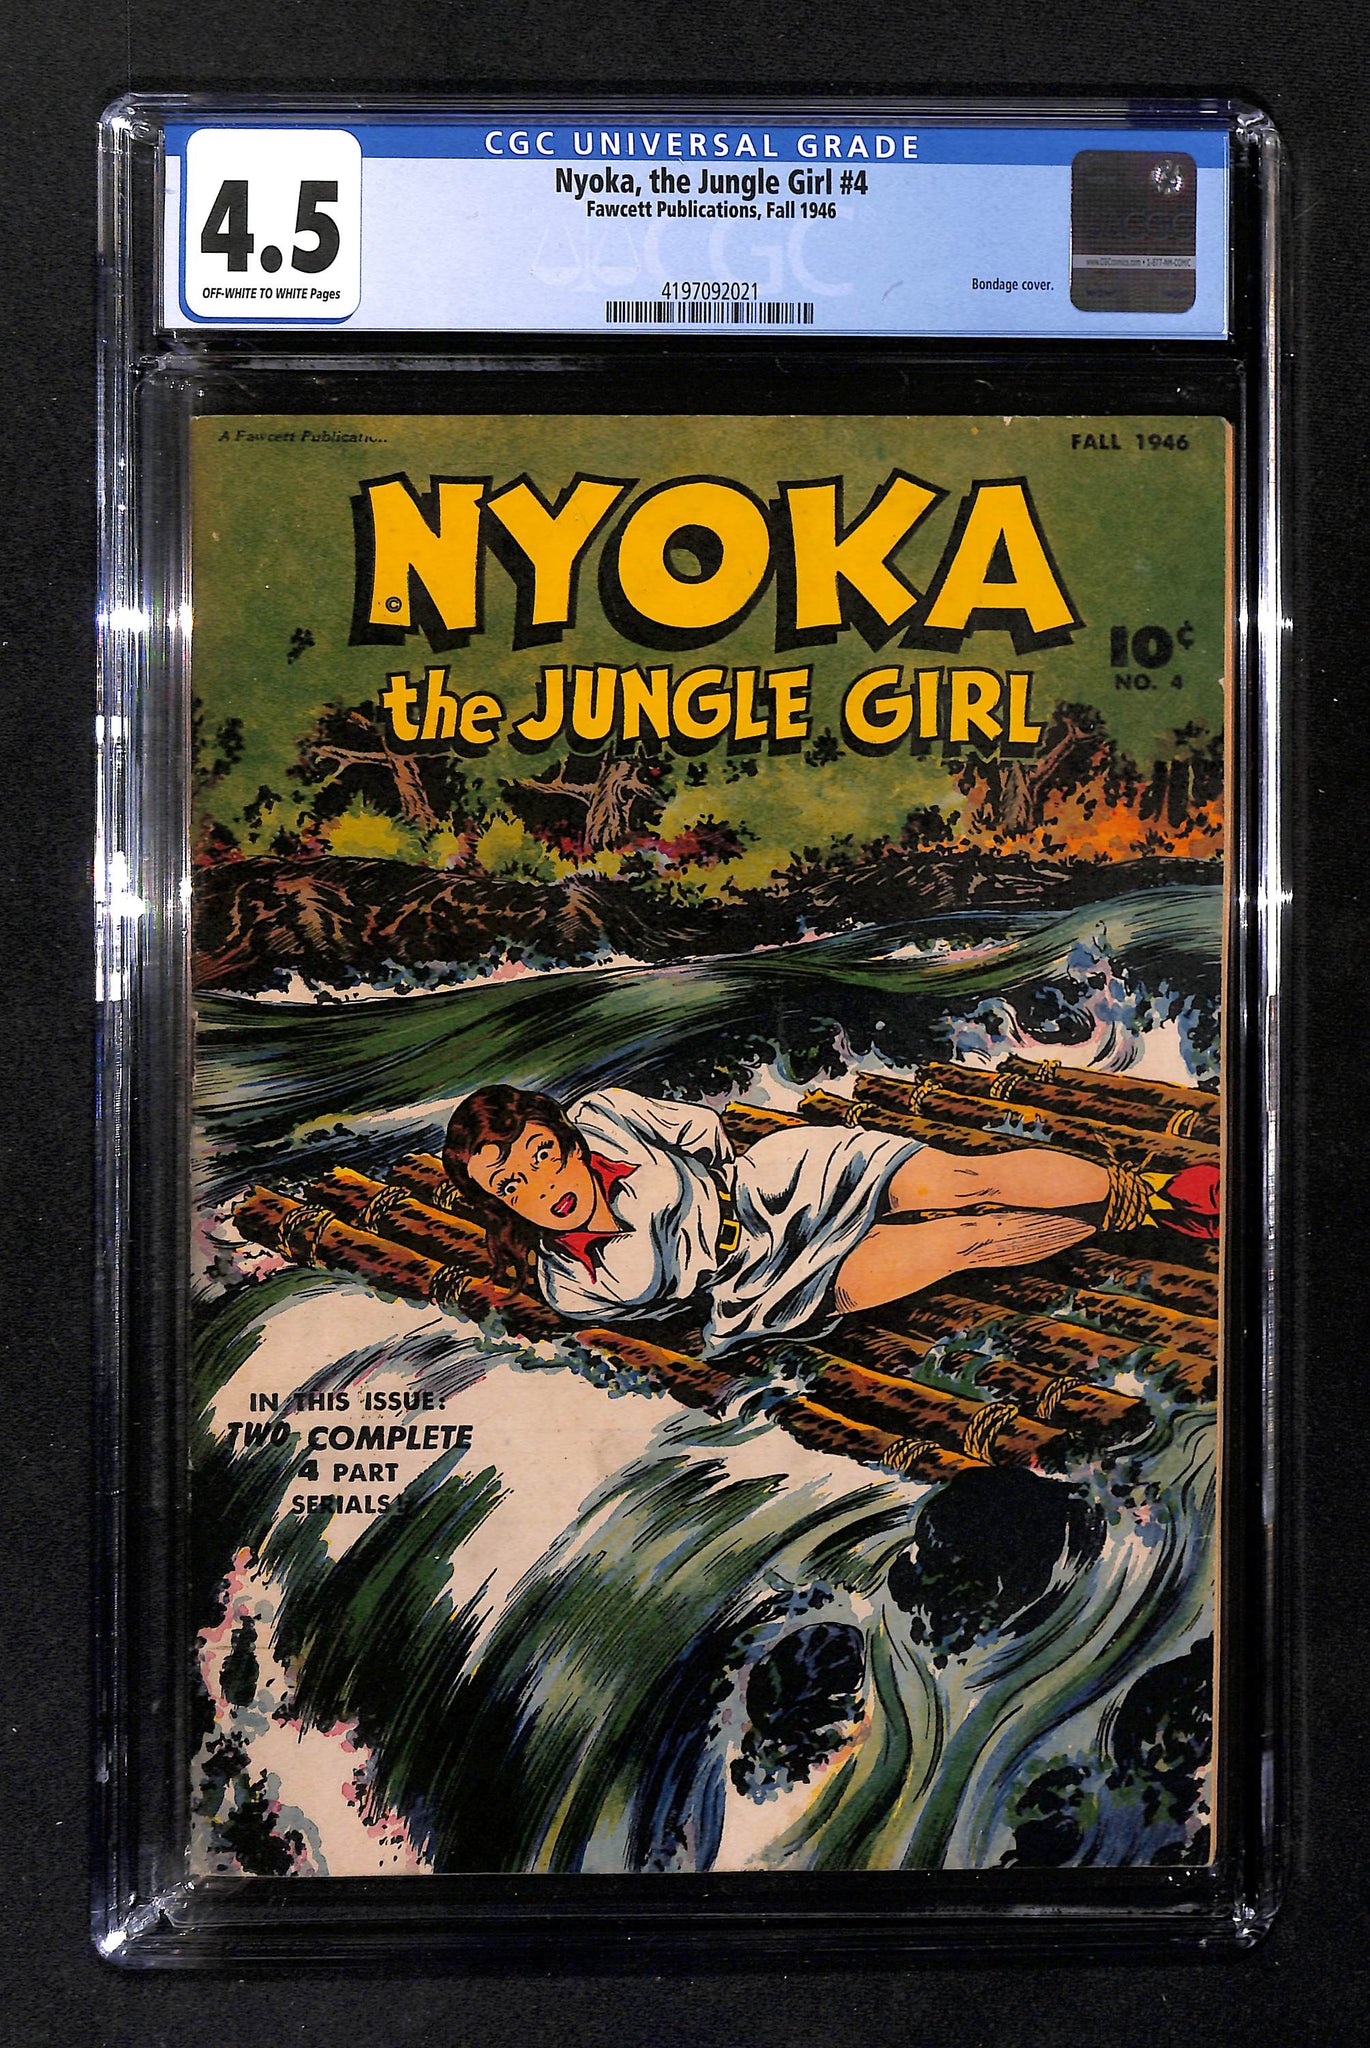 Nyoka, the Jungle Girl #4 CGC 4.5 Bondage cover